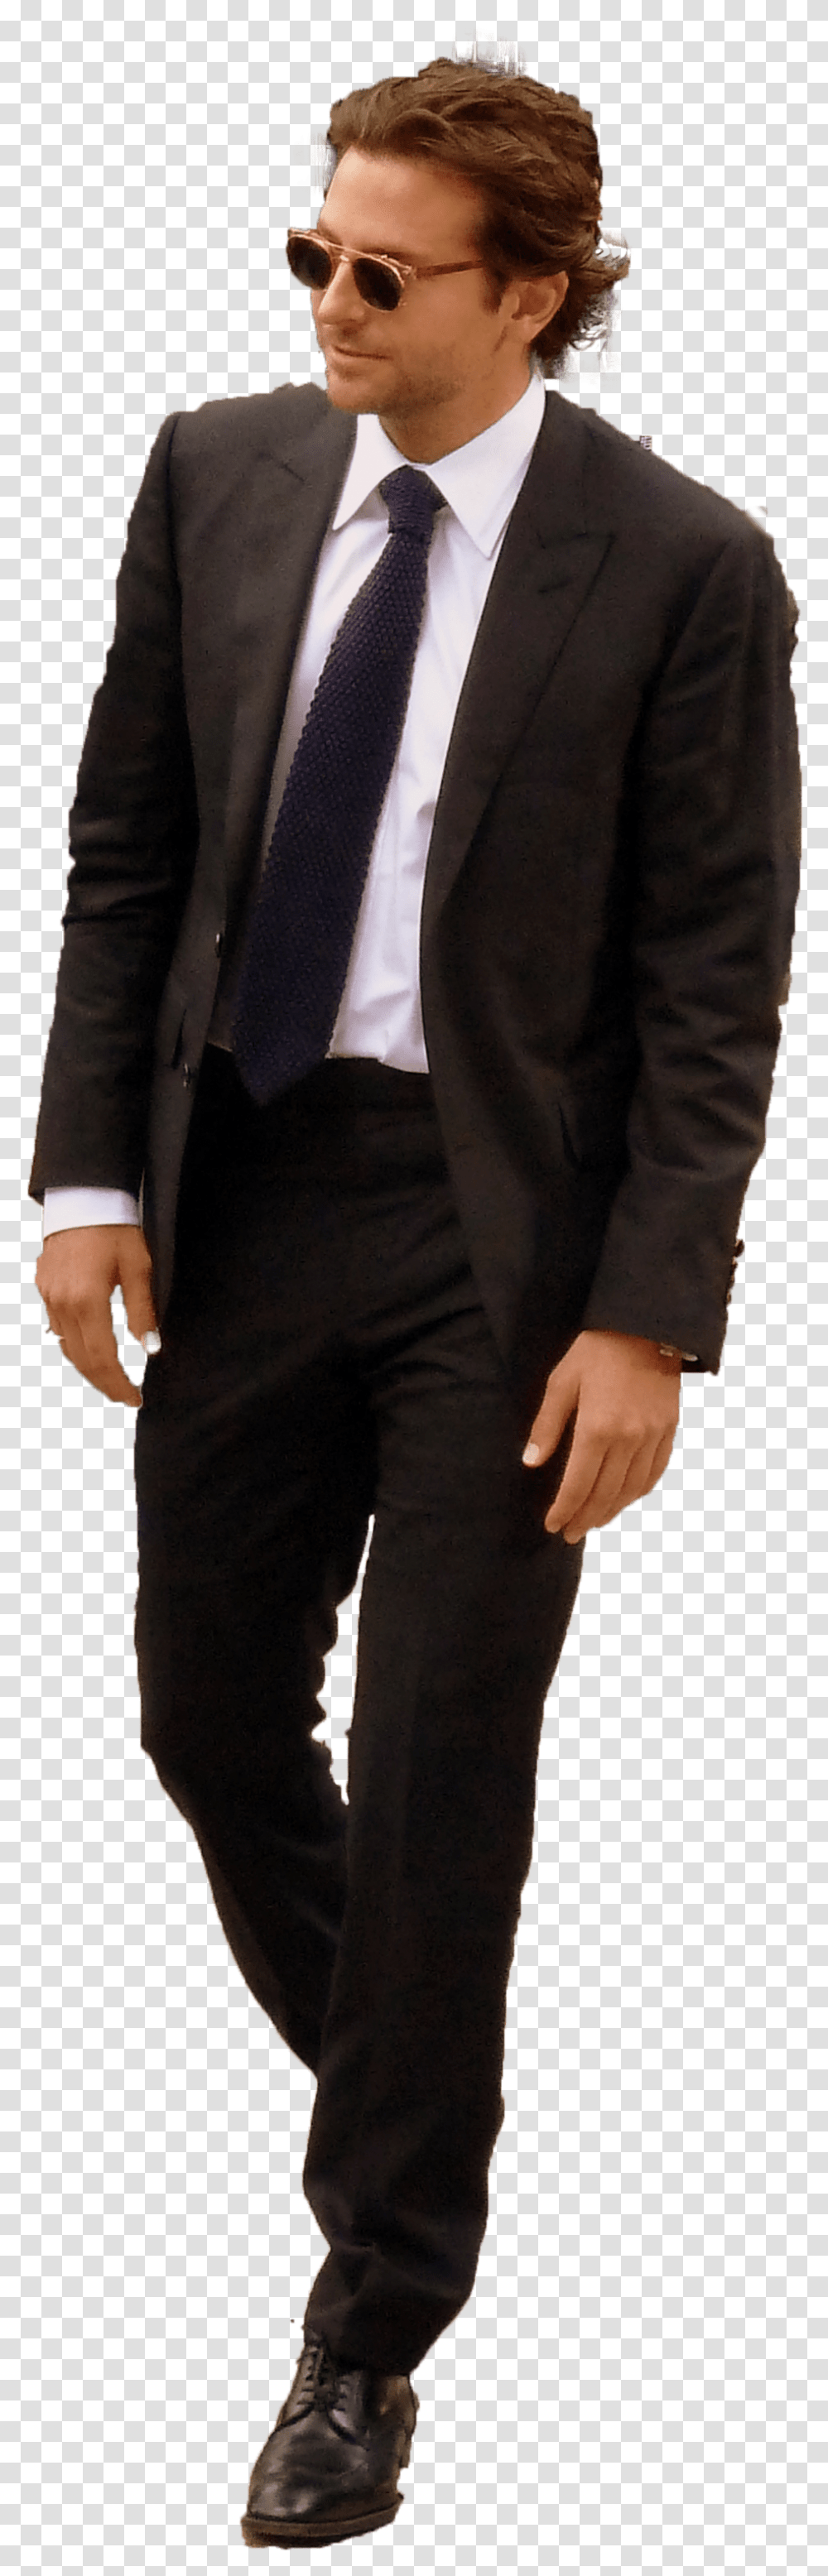 Business People Walking 2002, Suit, Overcoat, Tie Transparent Png